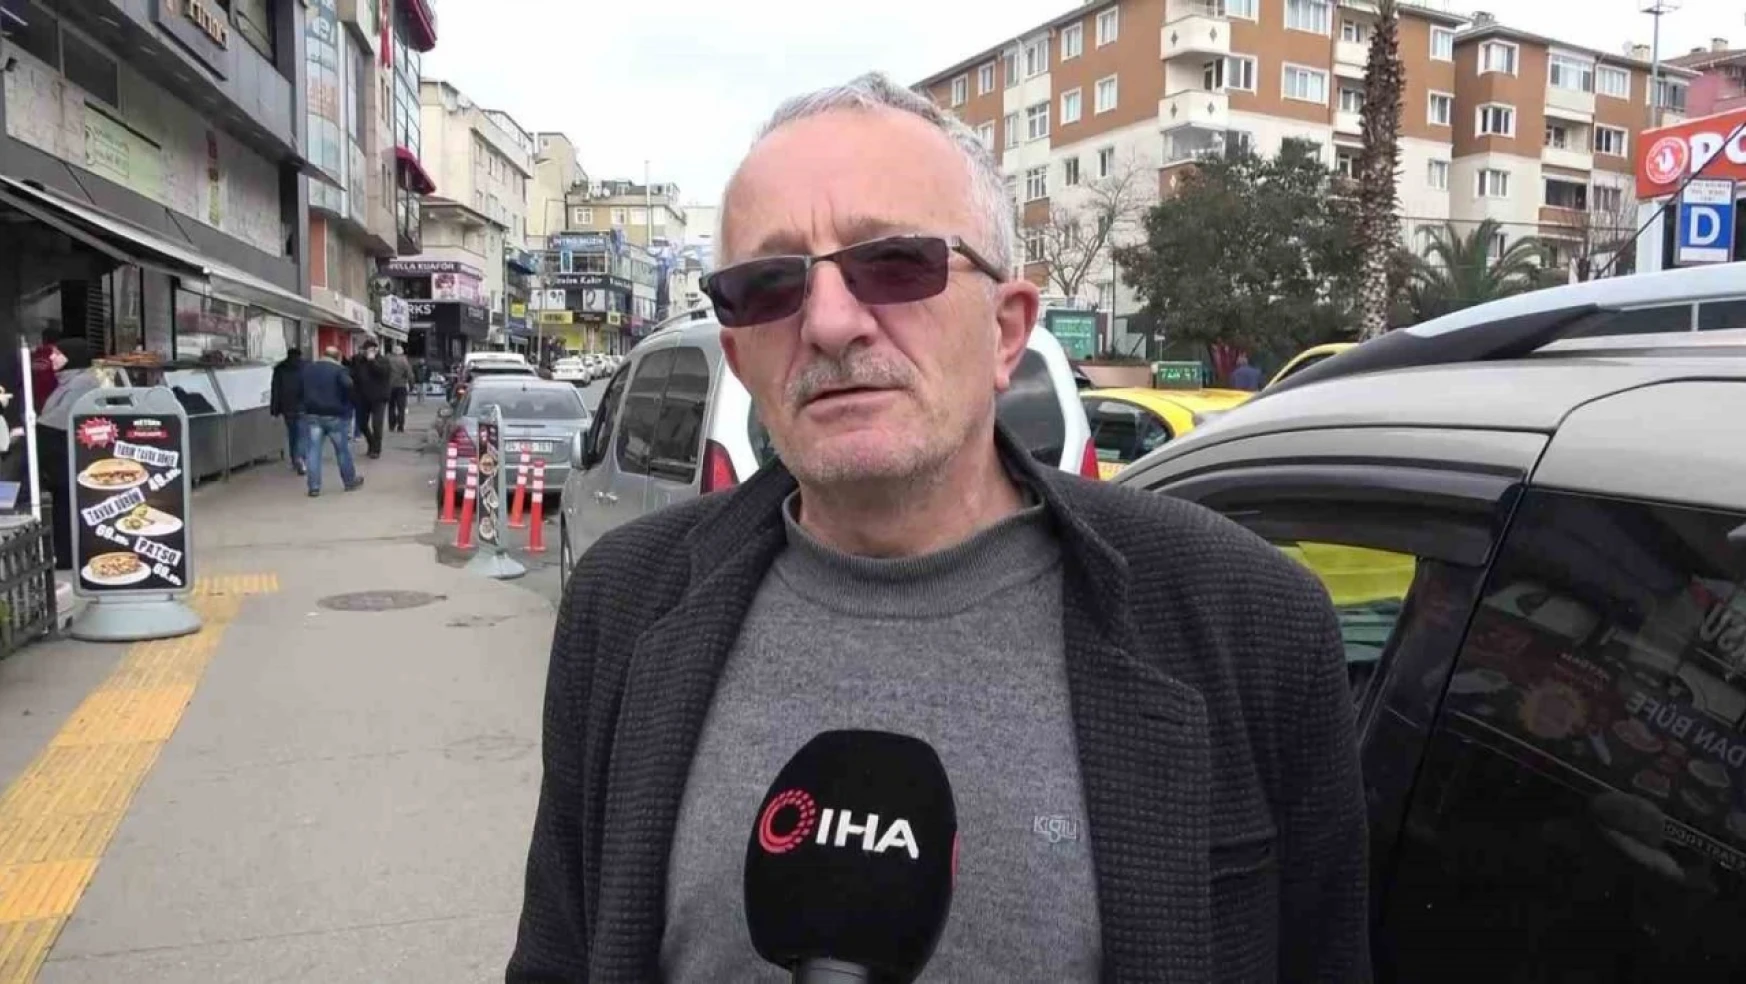 CHP'nin seccade dağıtmasına vatandaşlar tepki gösterdi